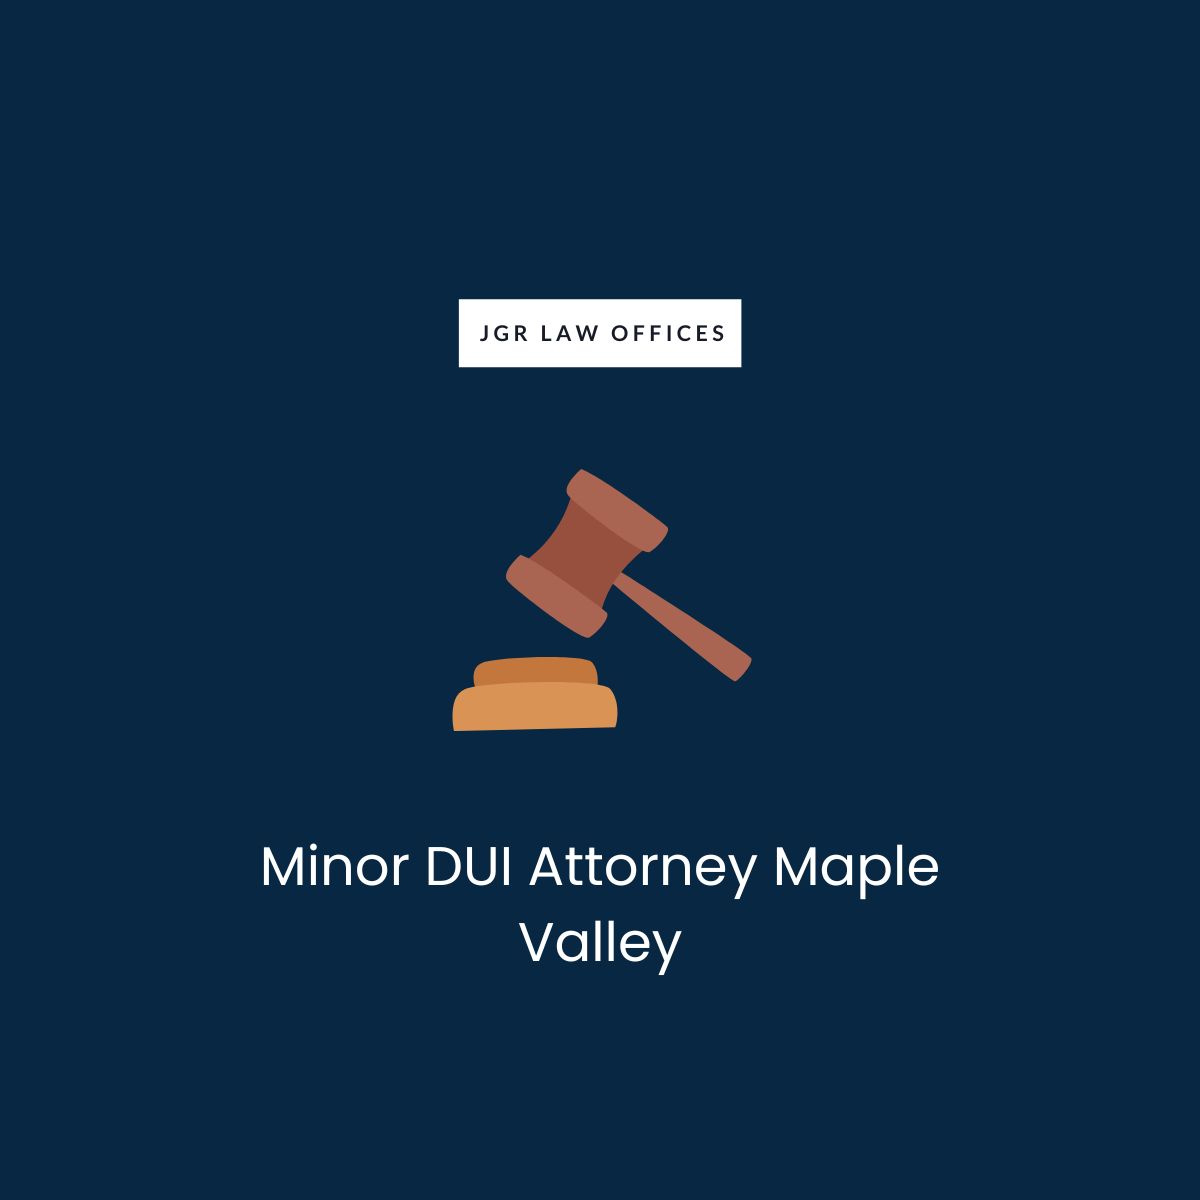 Minor DUI Lawyer Maple Valley Minor DUI Minor DUI